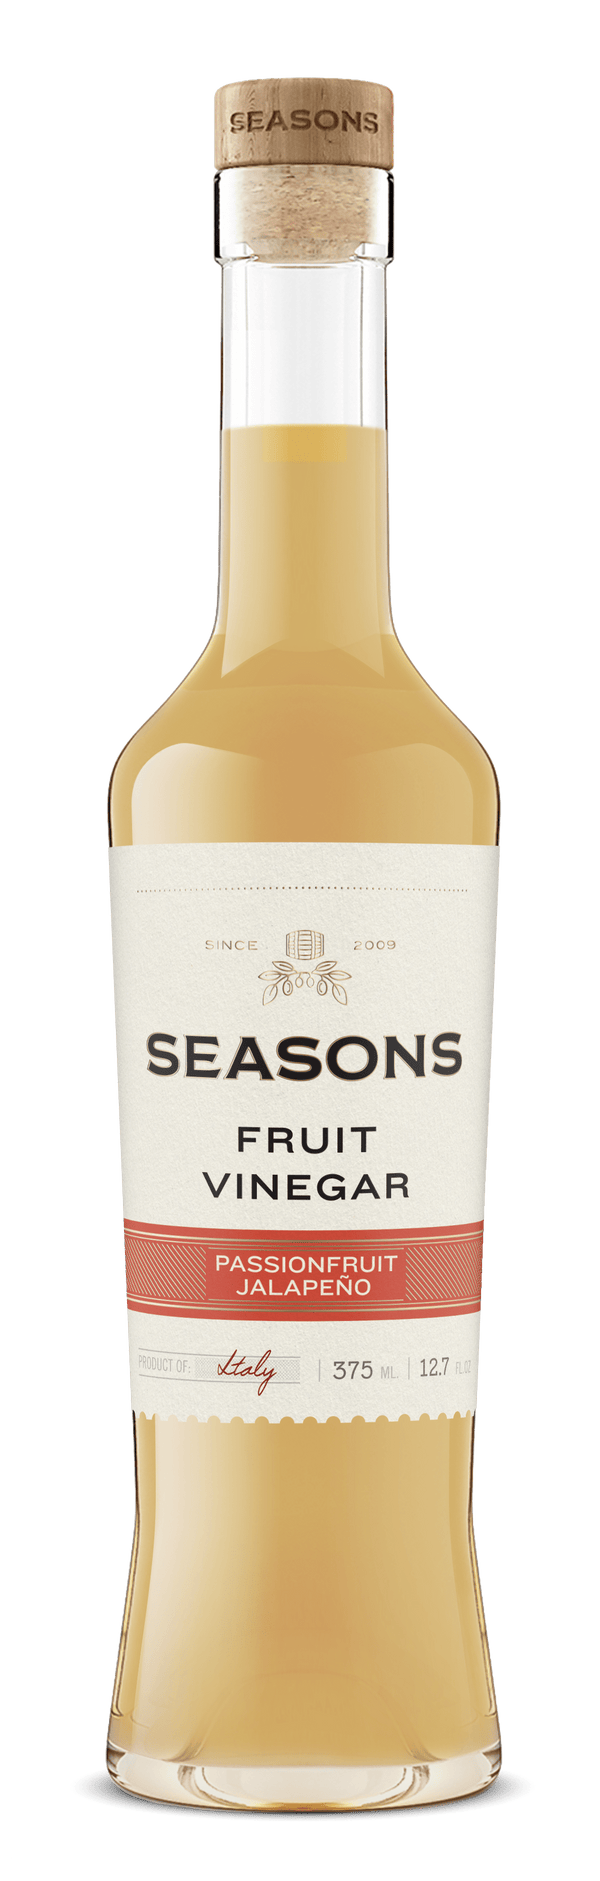 Seasons Fruit Vinegar 375mL Passionfruit Jalapeño